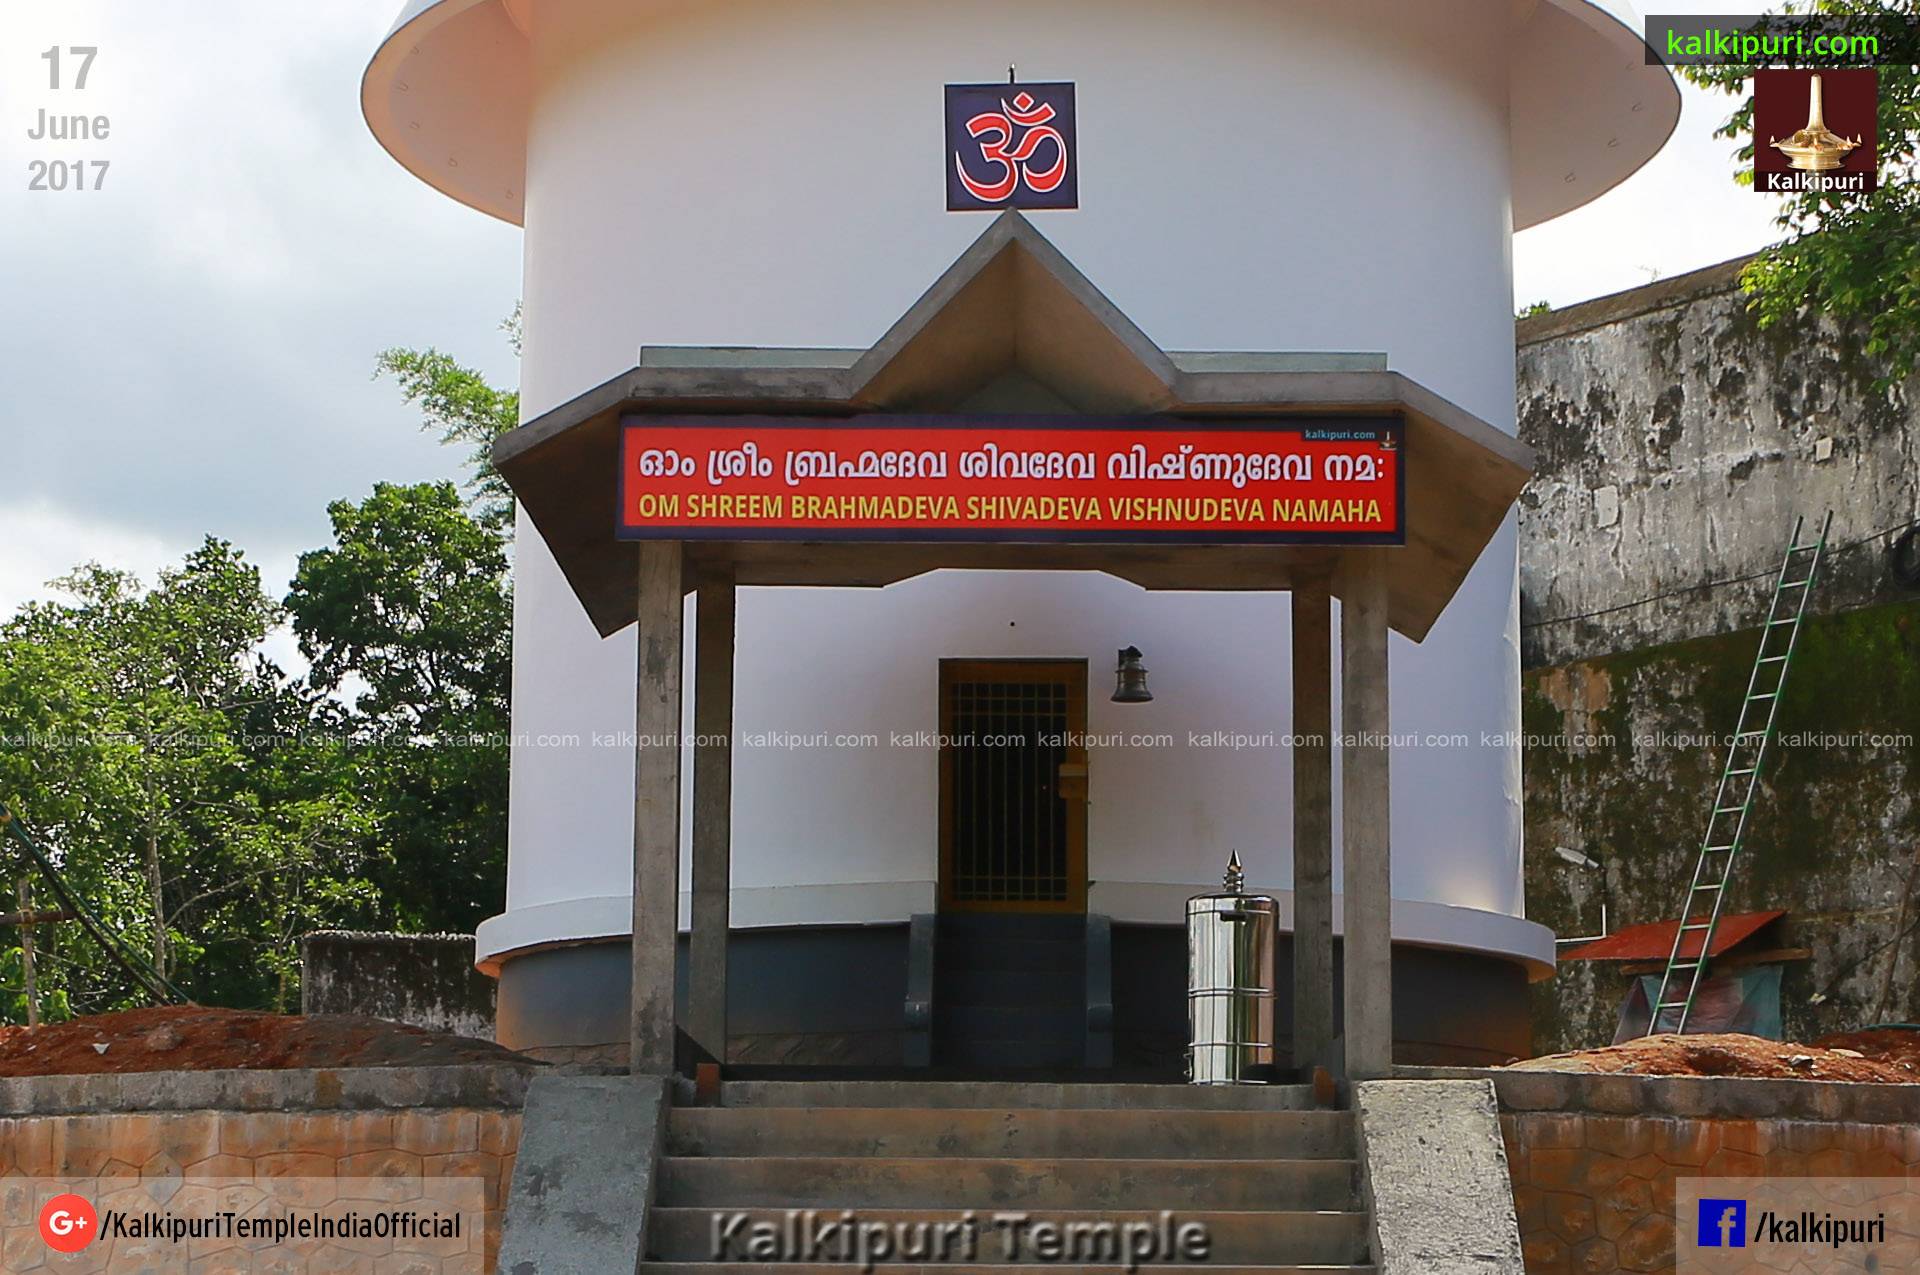 Kalkipuri Mantra. Kalki is the 10th incarnation of Lord Vishnu and founder of Kalkipuri estd. in 2001 at His birth place.